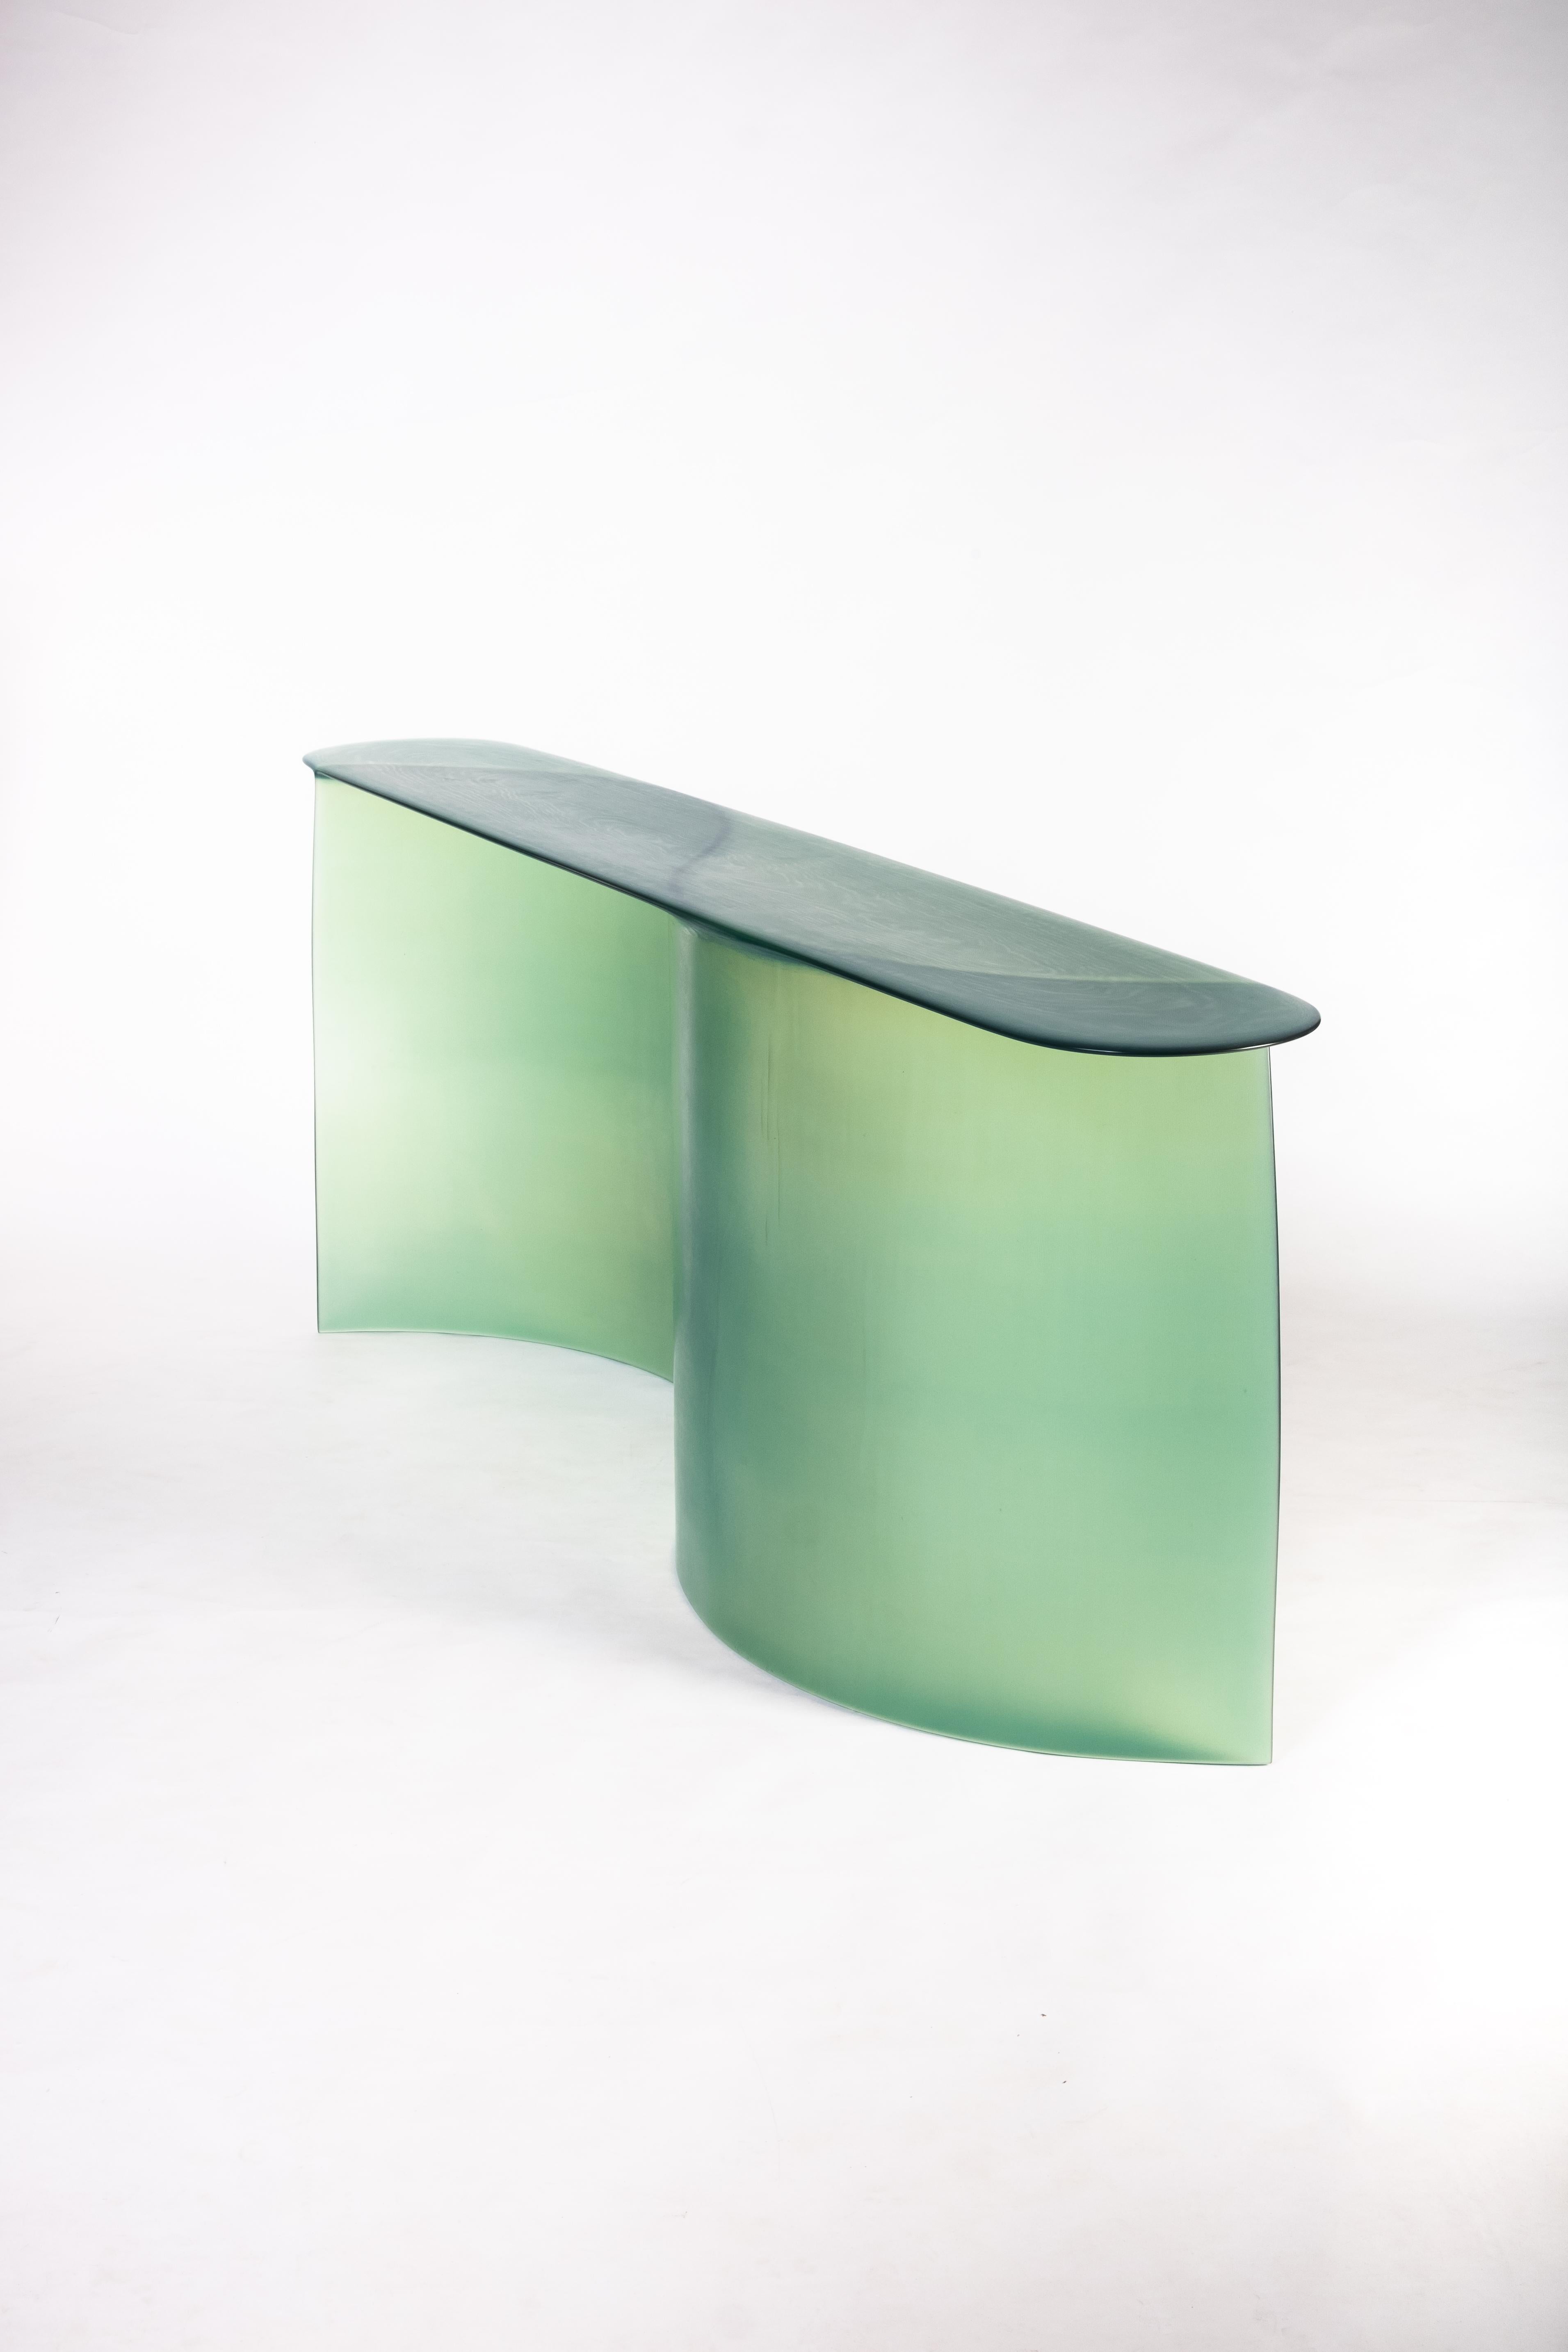 Dutch Contemporary Green Fiberglass, New Wave Console, by Lukas Cober